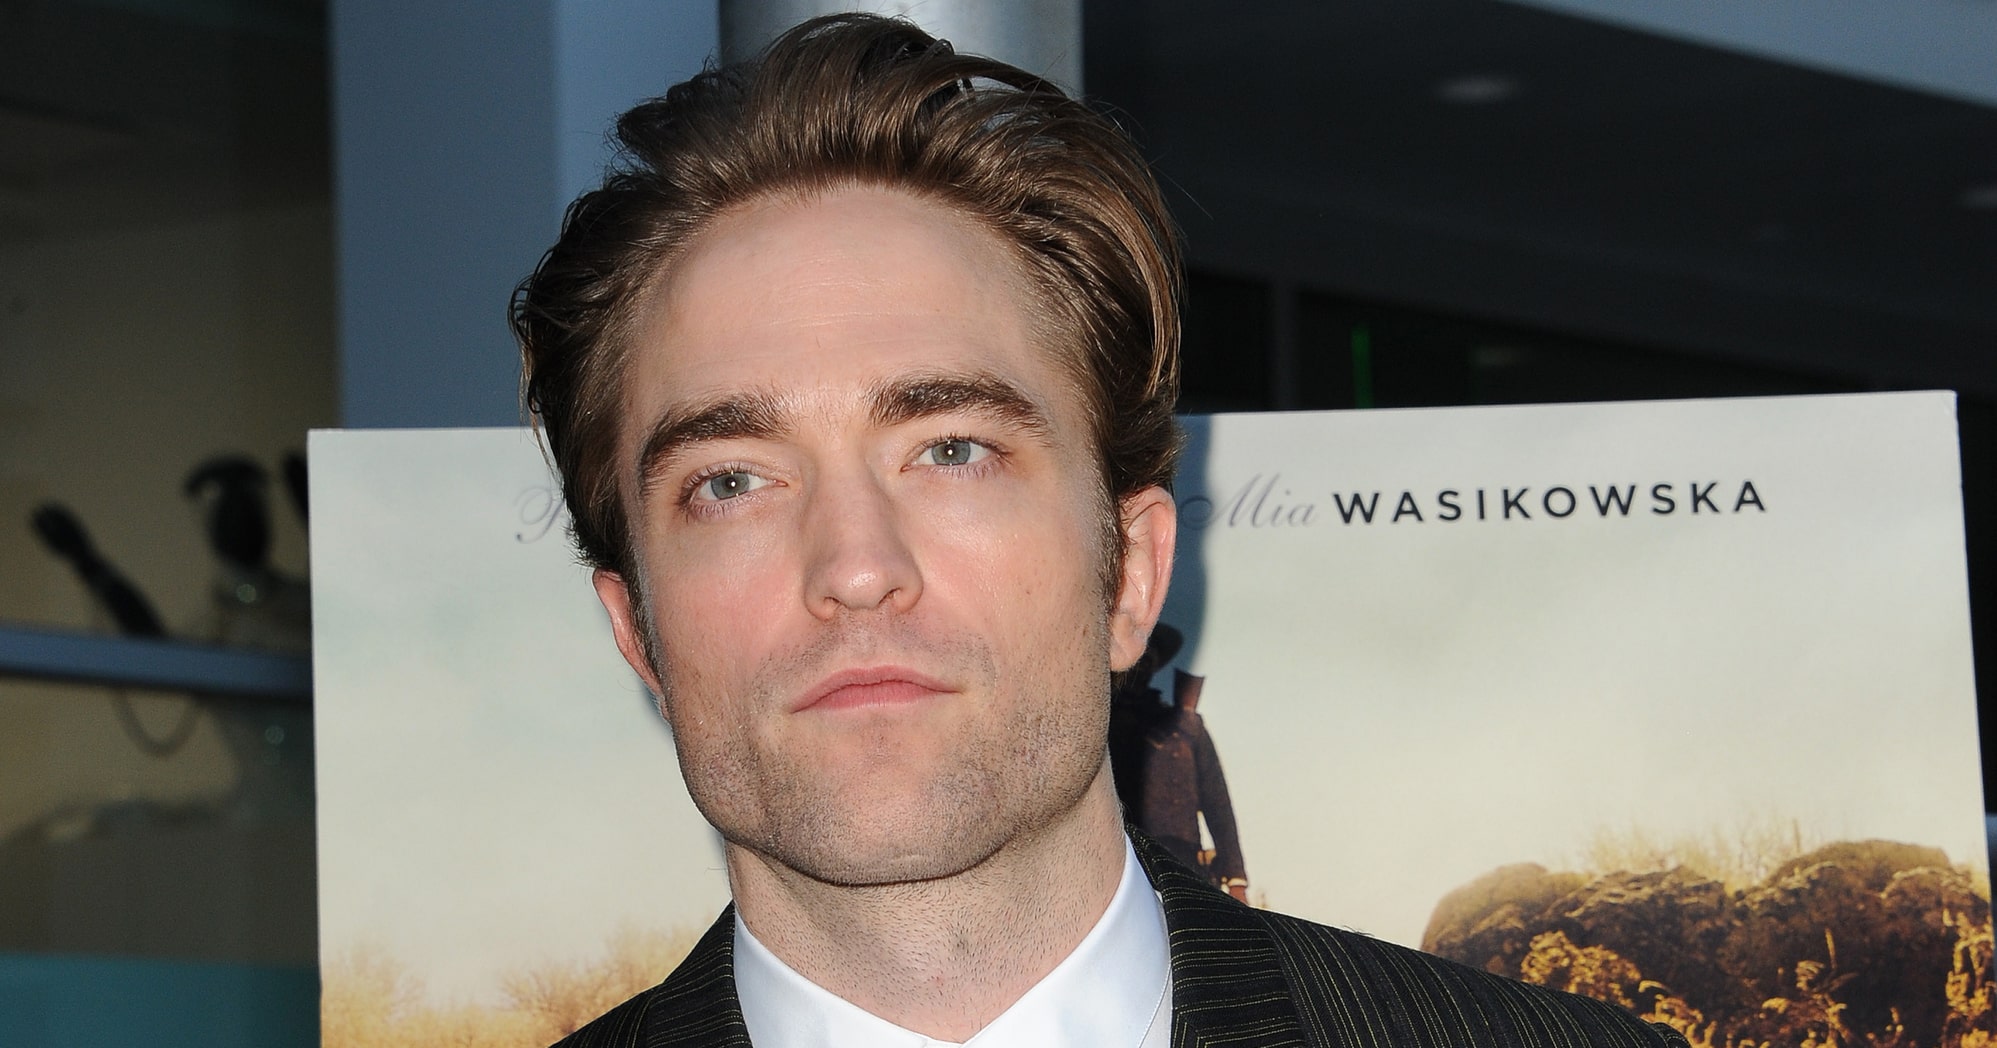 Robert Pattinson - Naturally handsome or plastic surgery?